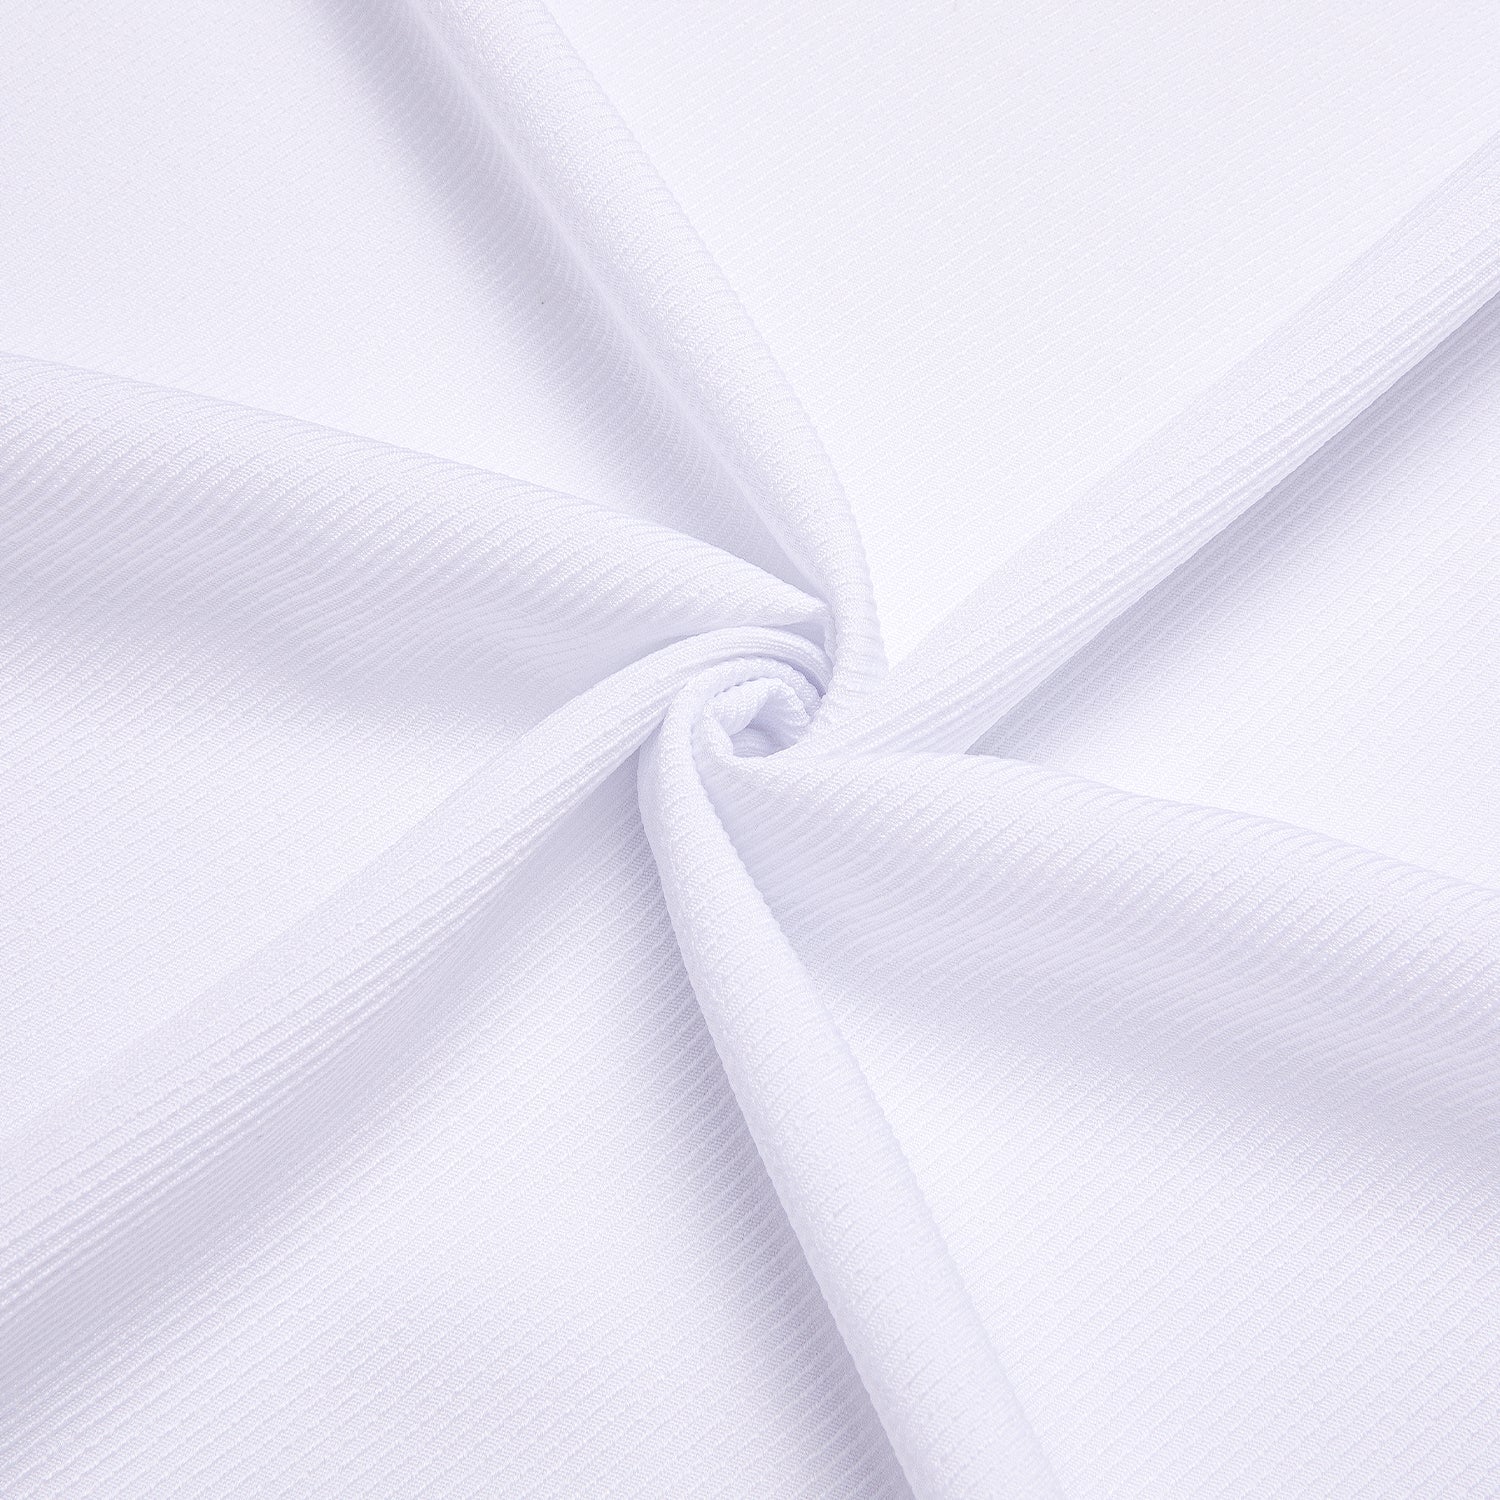 Pure White Solid Business Casual Versatile Men's Long Sleeve Dress Shirt